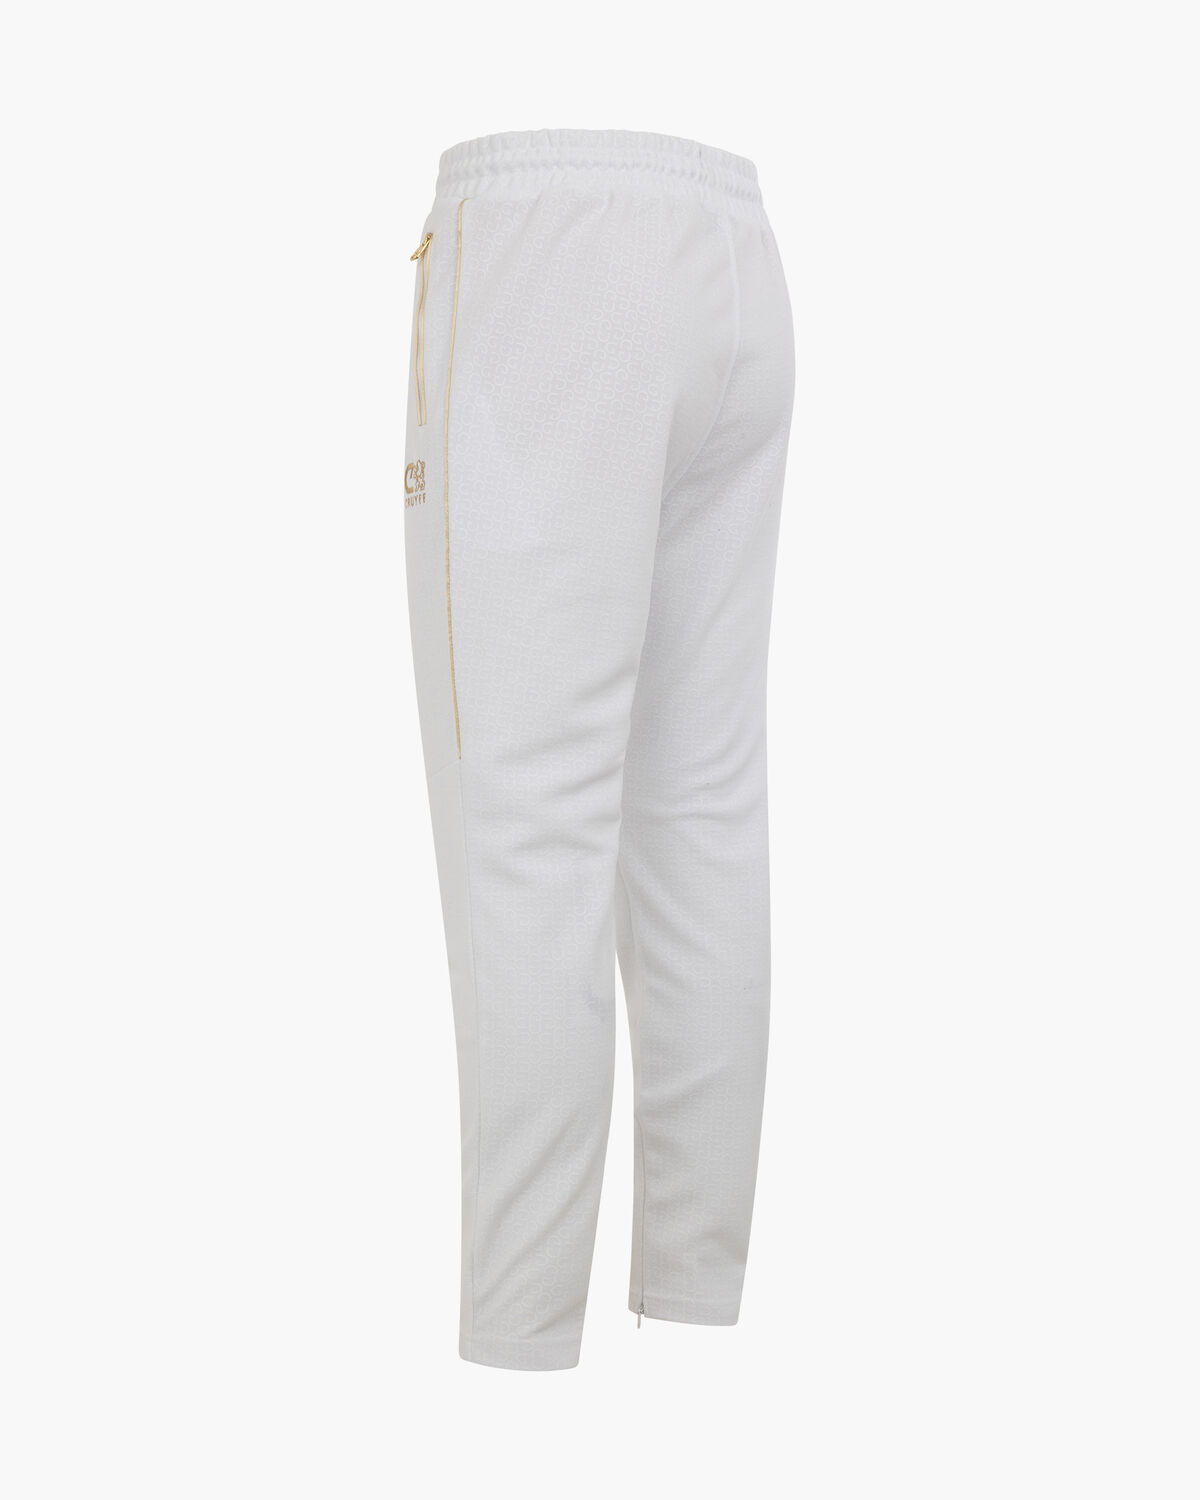 Refero Track Pants, White/Gold, hi-res